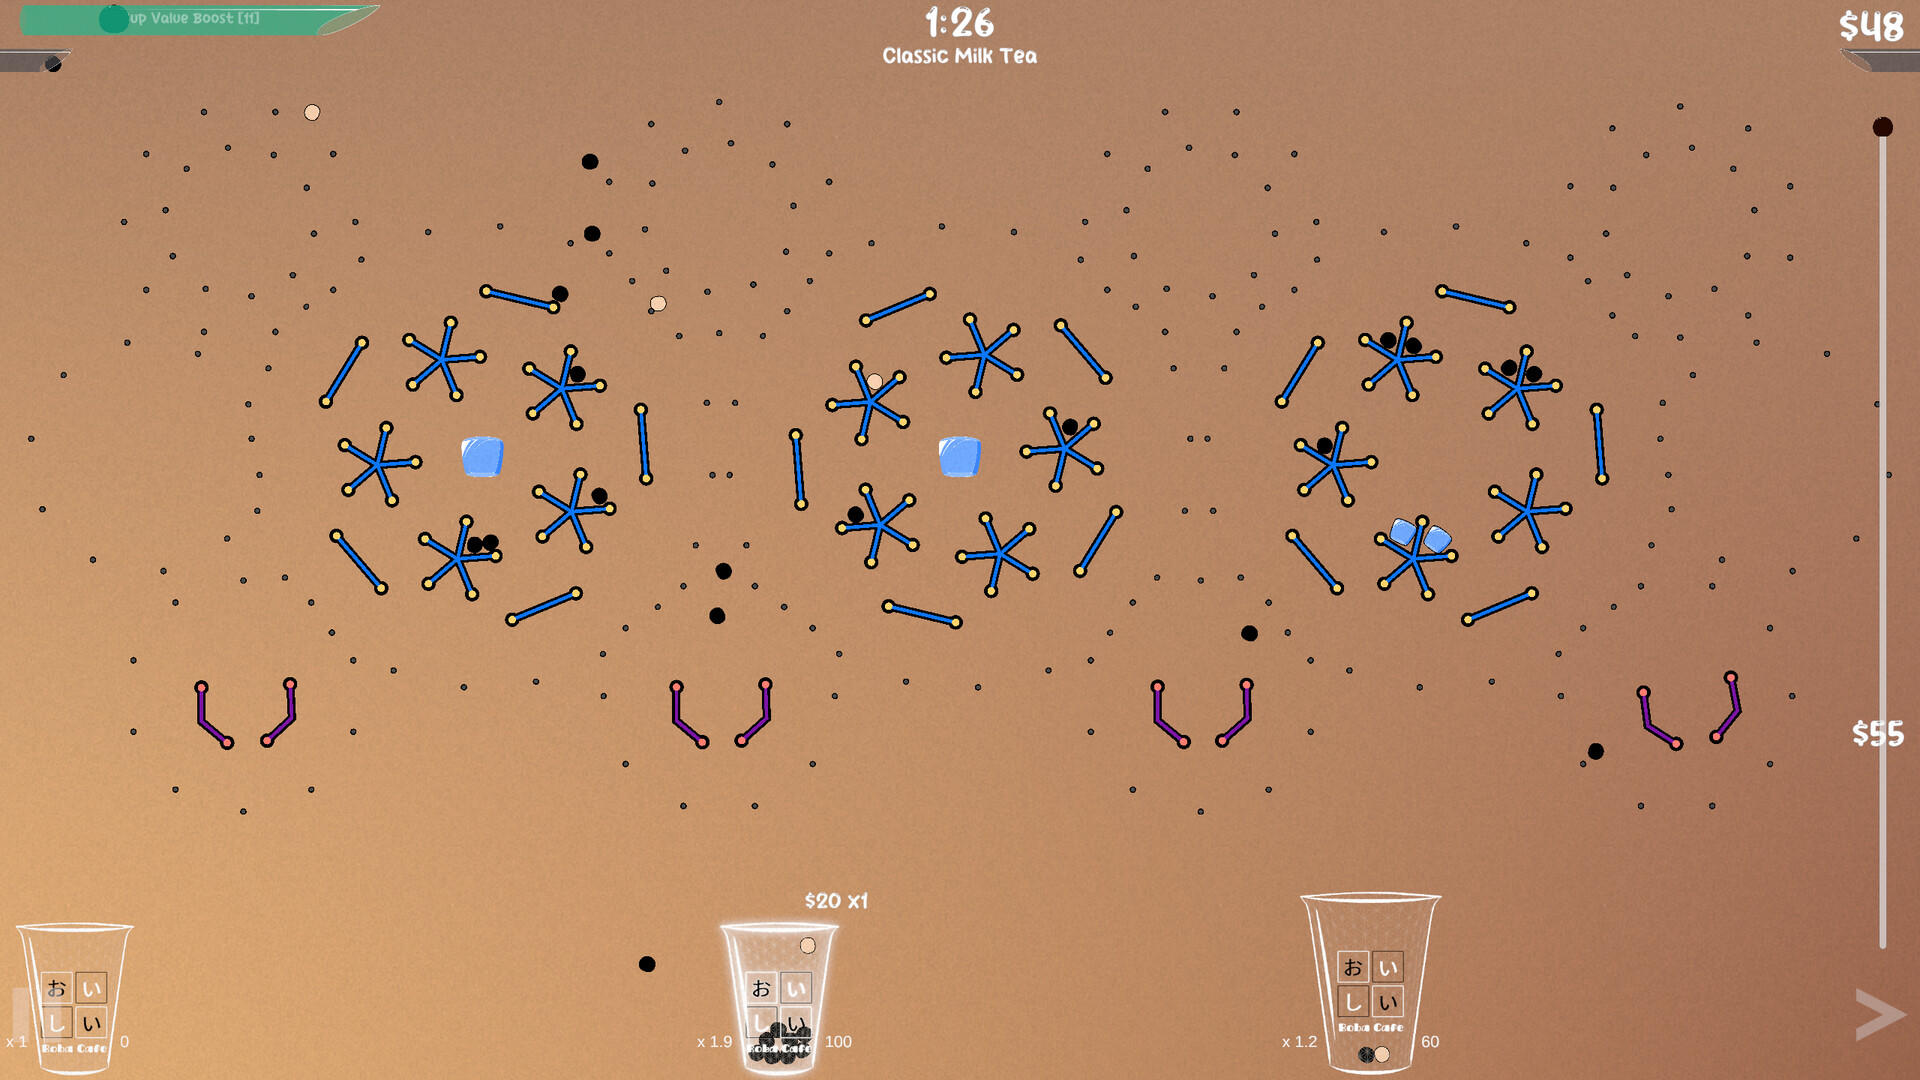 Super Boba - Pachinko Cafe Game Screenshot